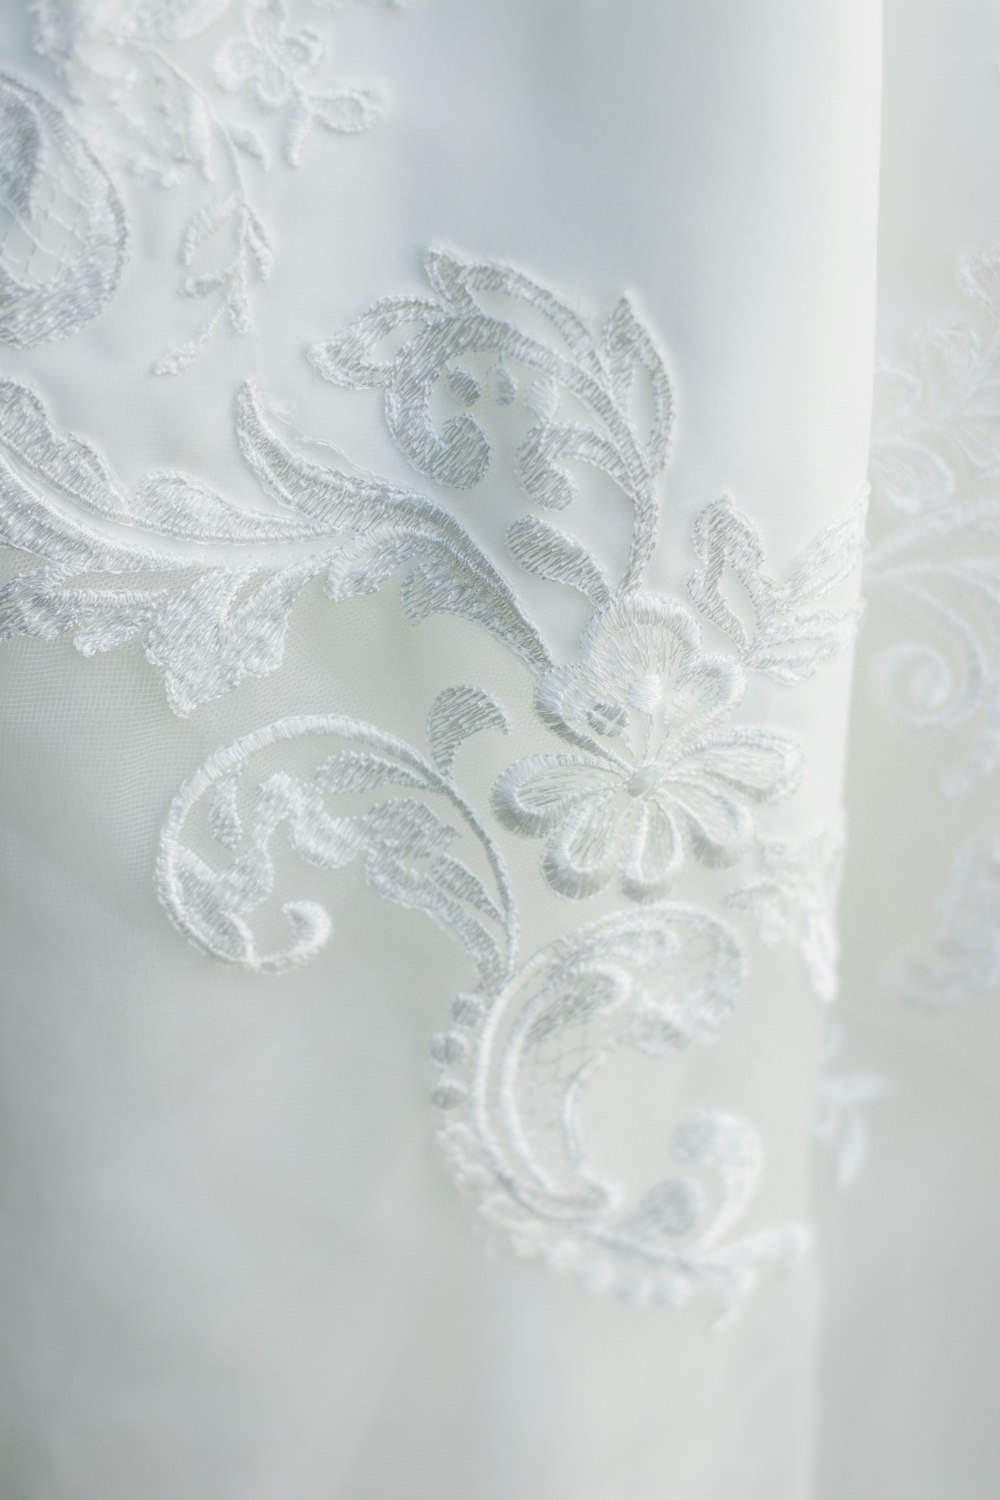 a close up of a white wedding dress